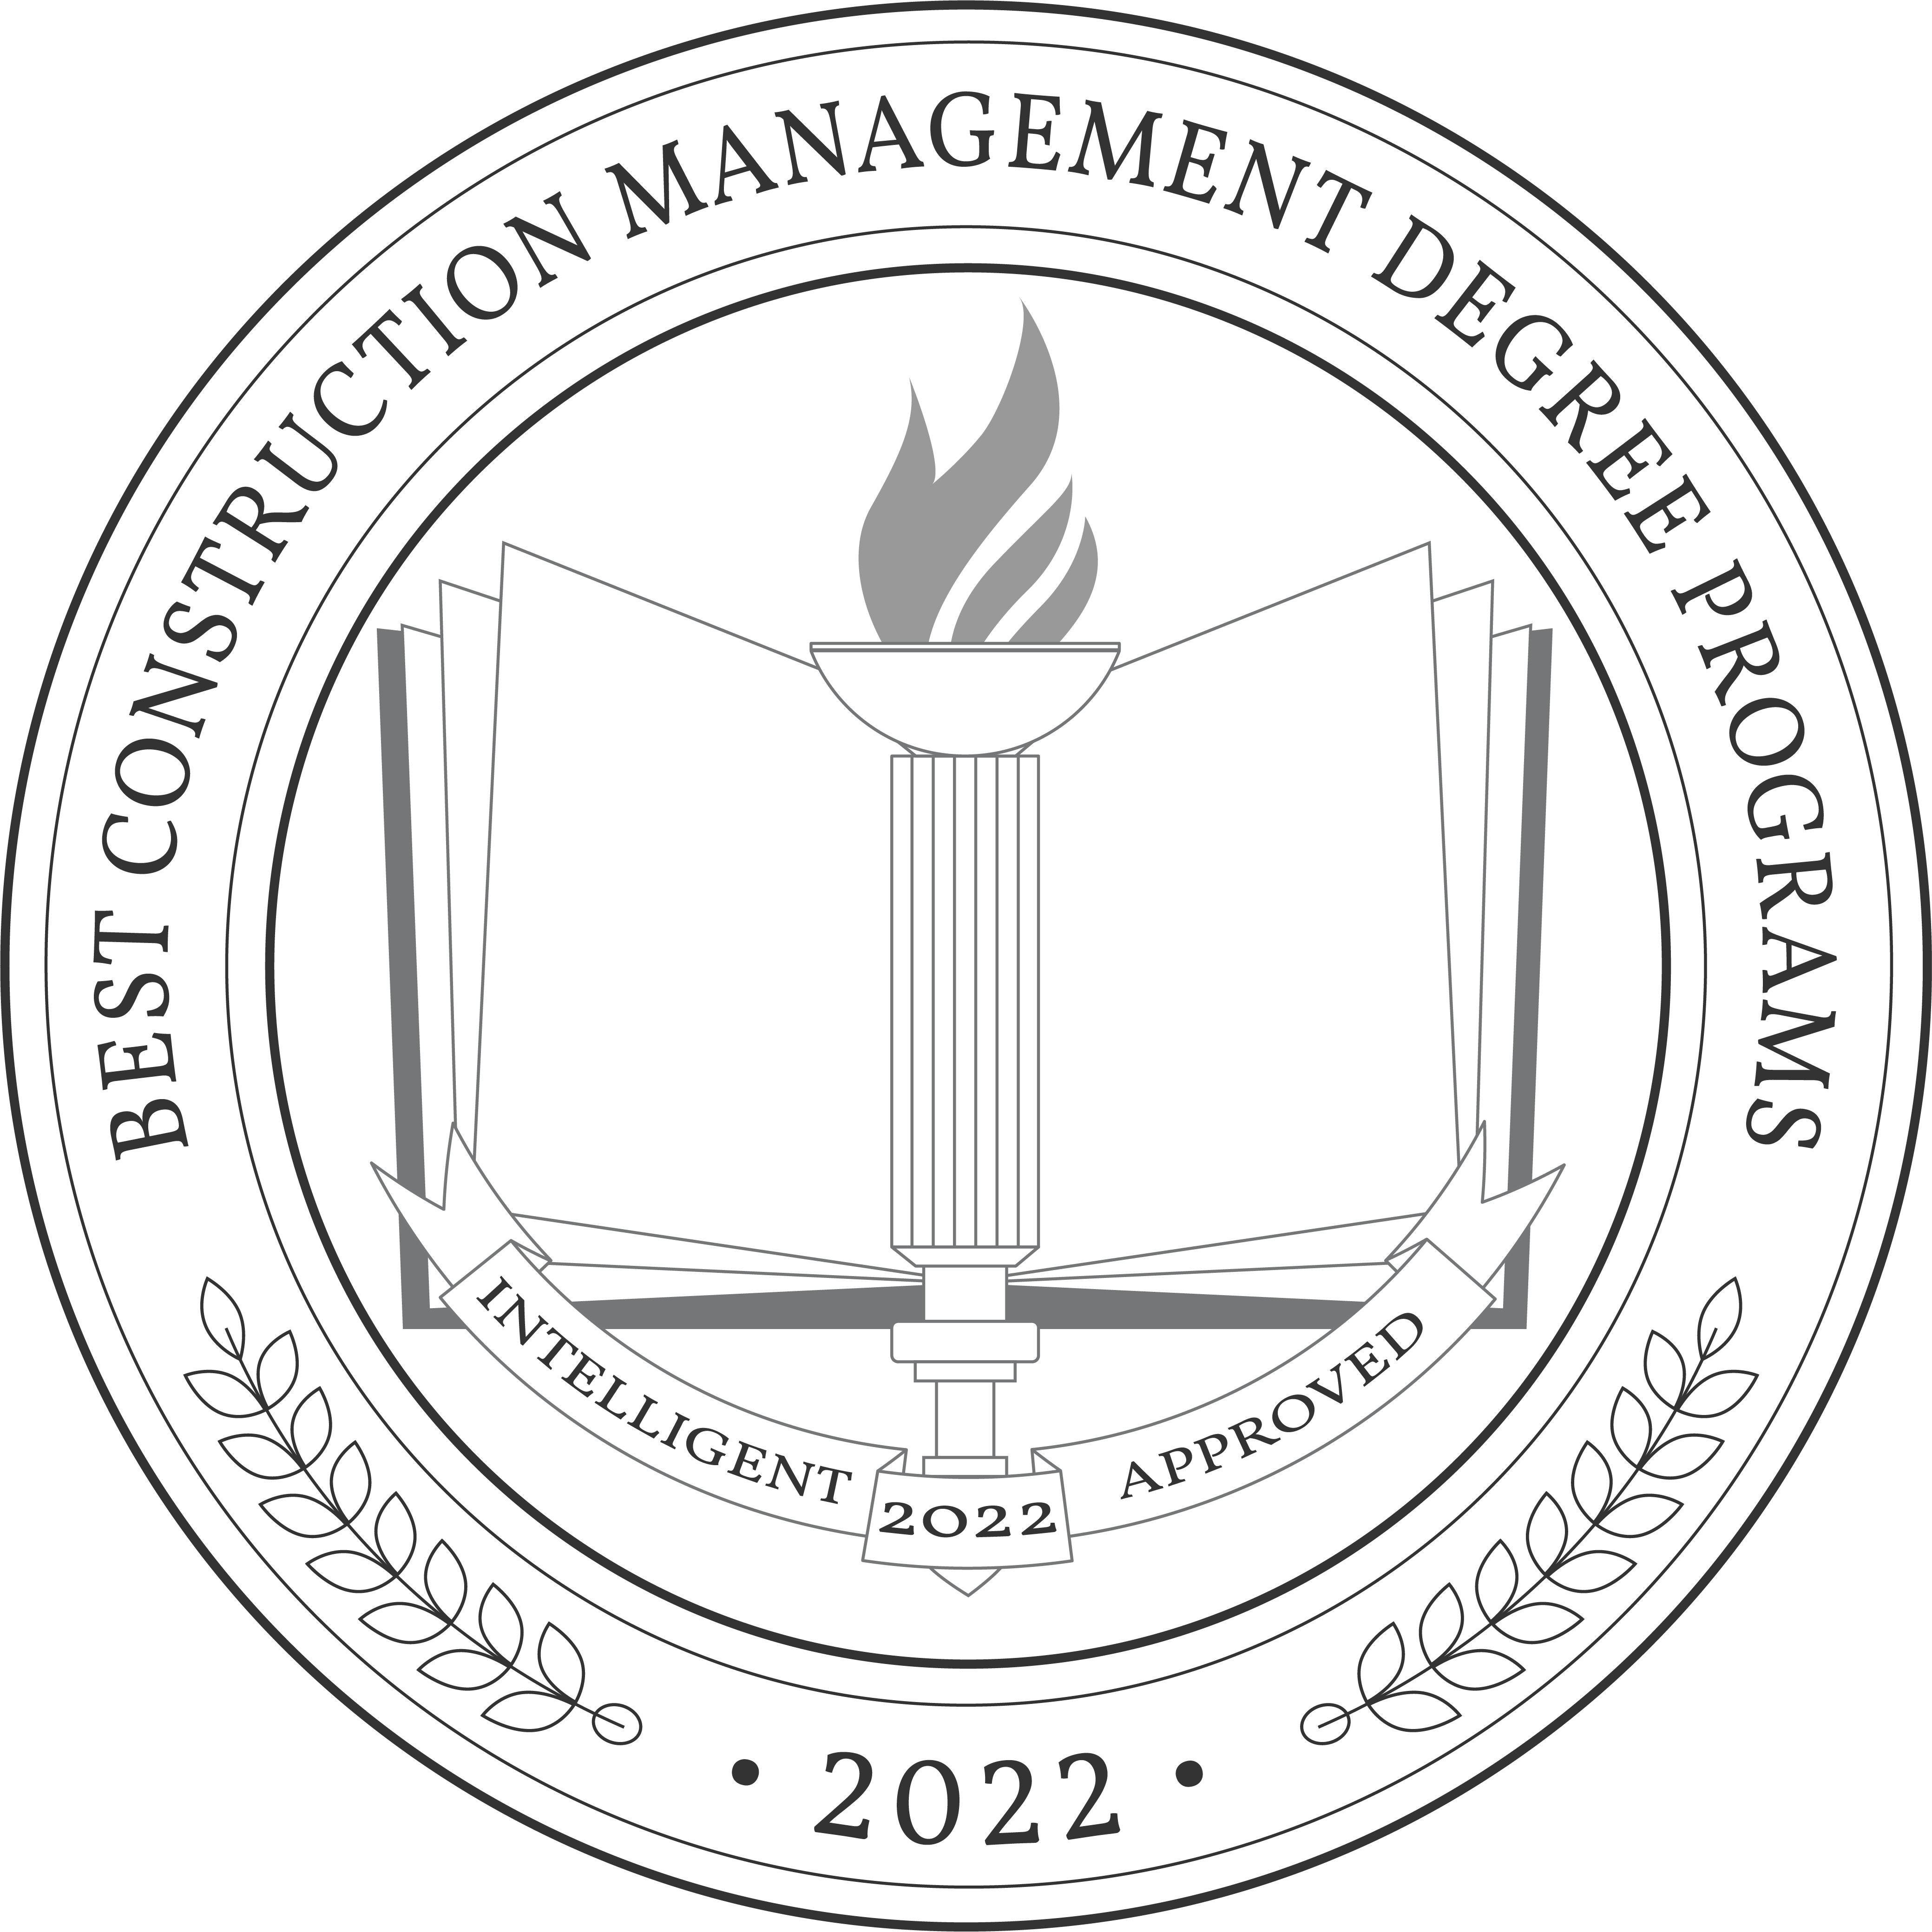 Best-Construction-Management-Degree-Programs-Badge.png